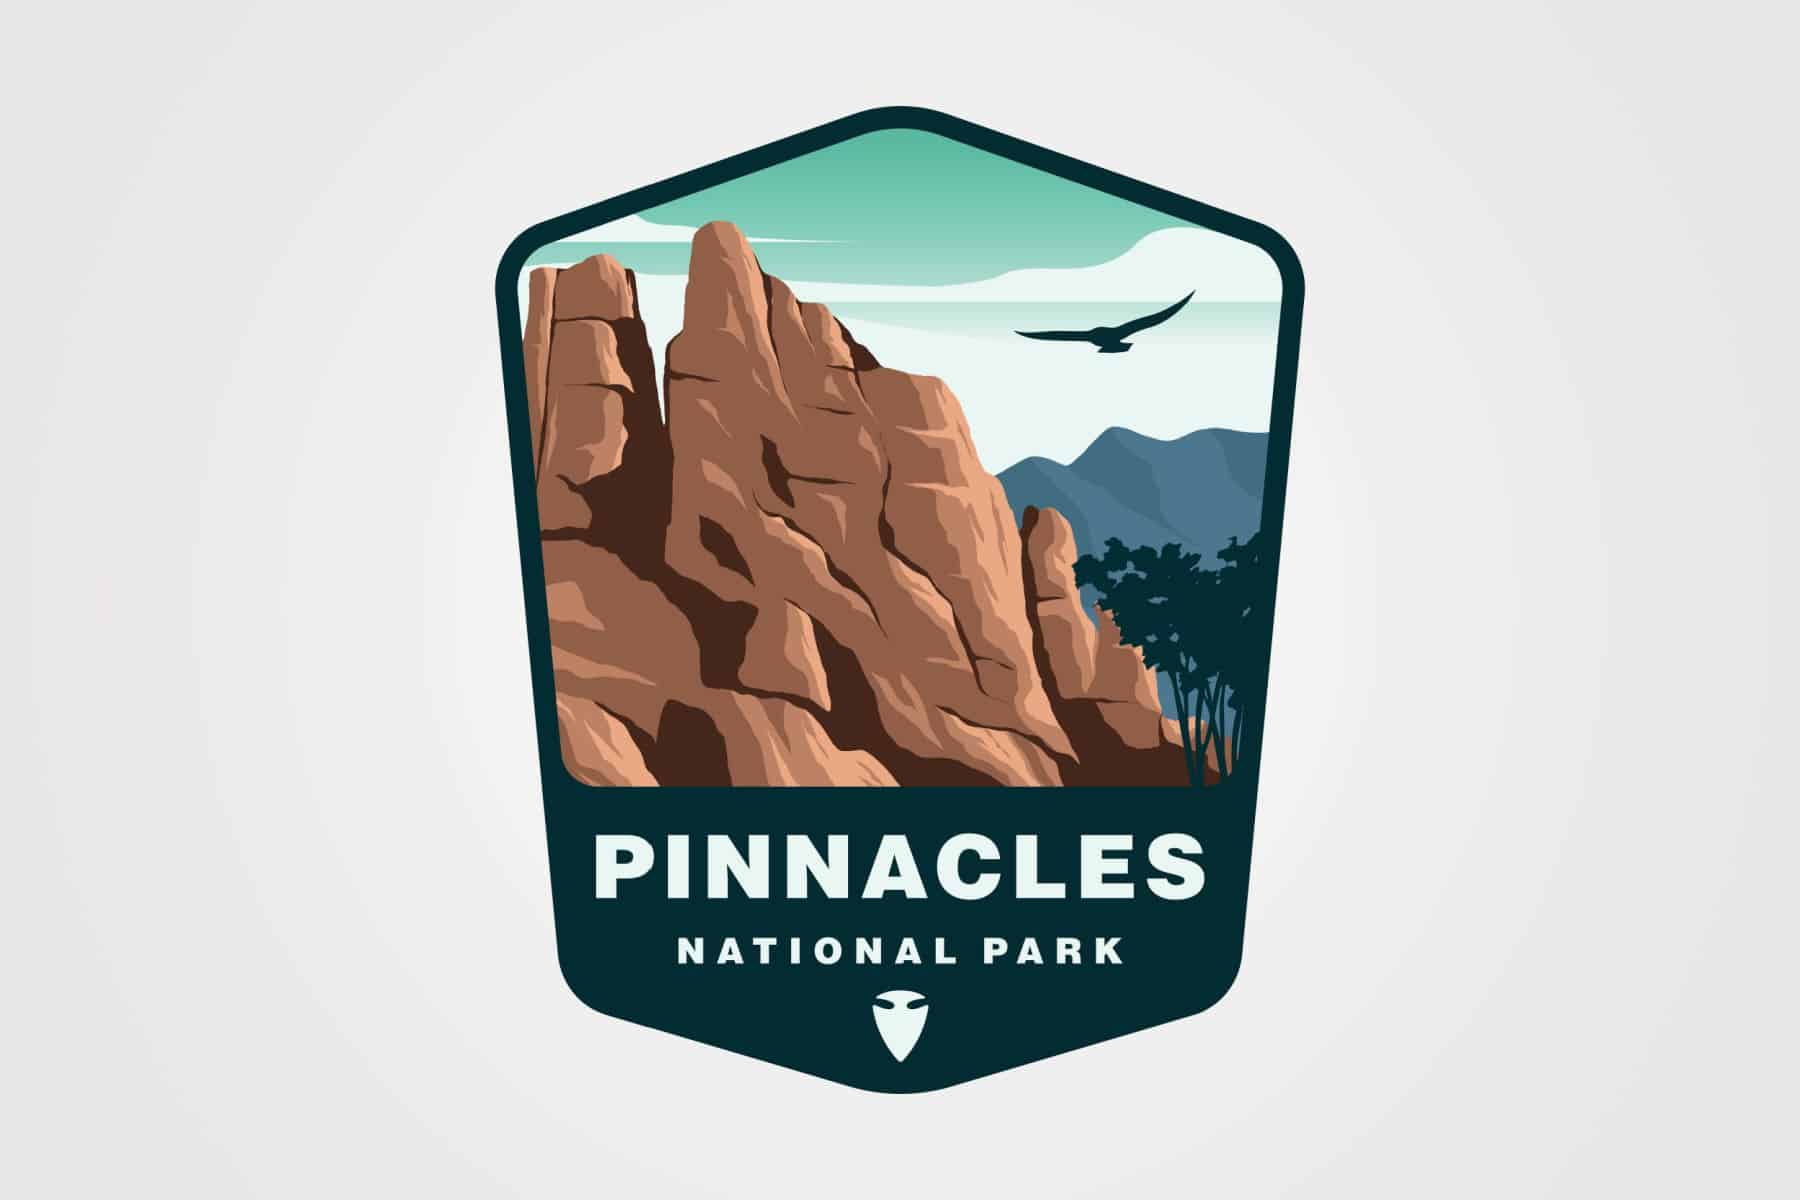 Pinnacles National Park Facts